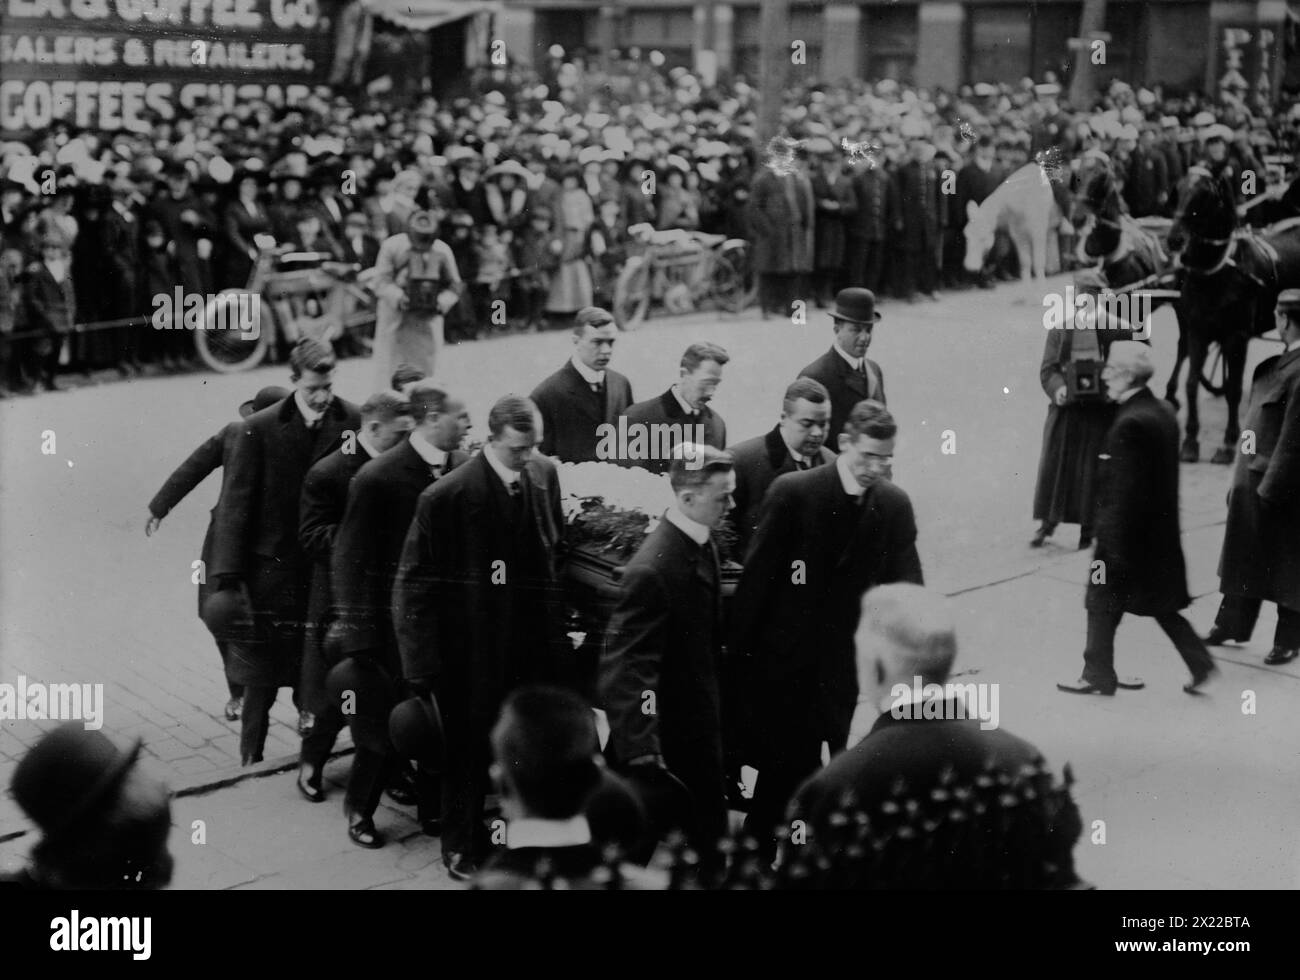 Funeral of J.S. Sherman, 1912. Shows funeral on November 2, 1912 for James Schoolcraft Sherman (1855-1912), Vice President under William Howard Taft, Utica, New York. Stock Photo